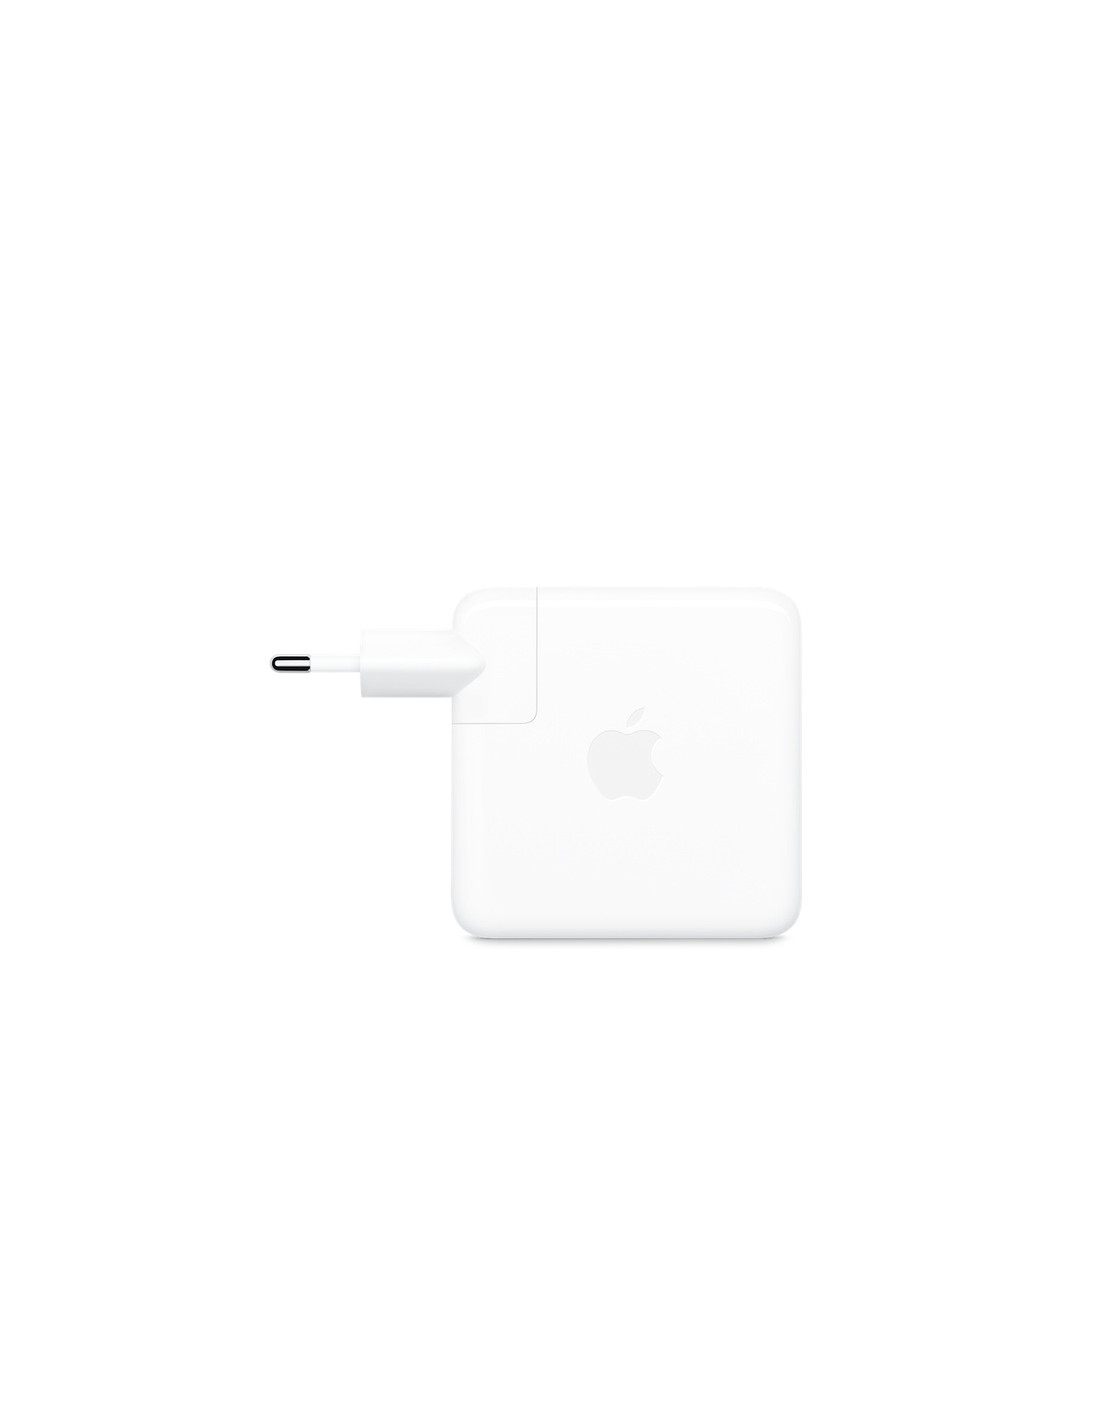 Chargeur Macbook Air USB-C